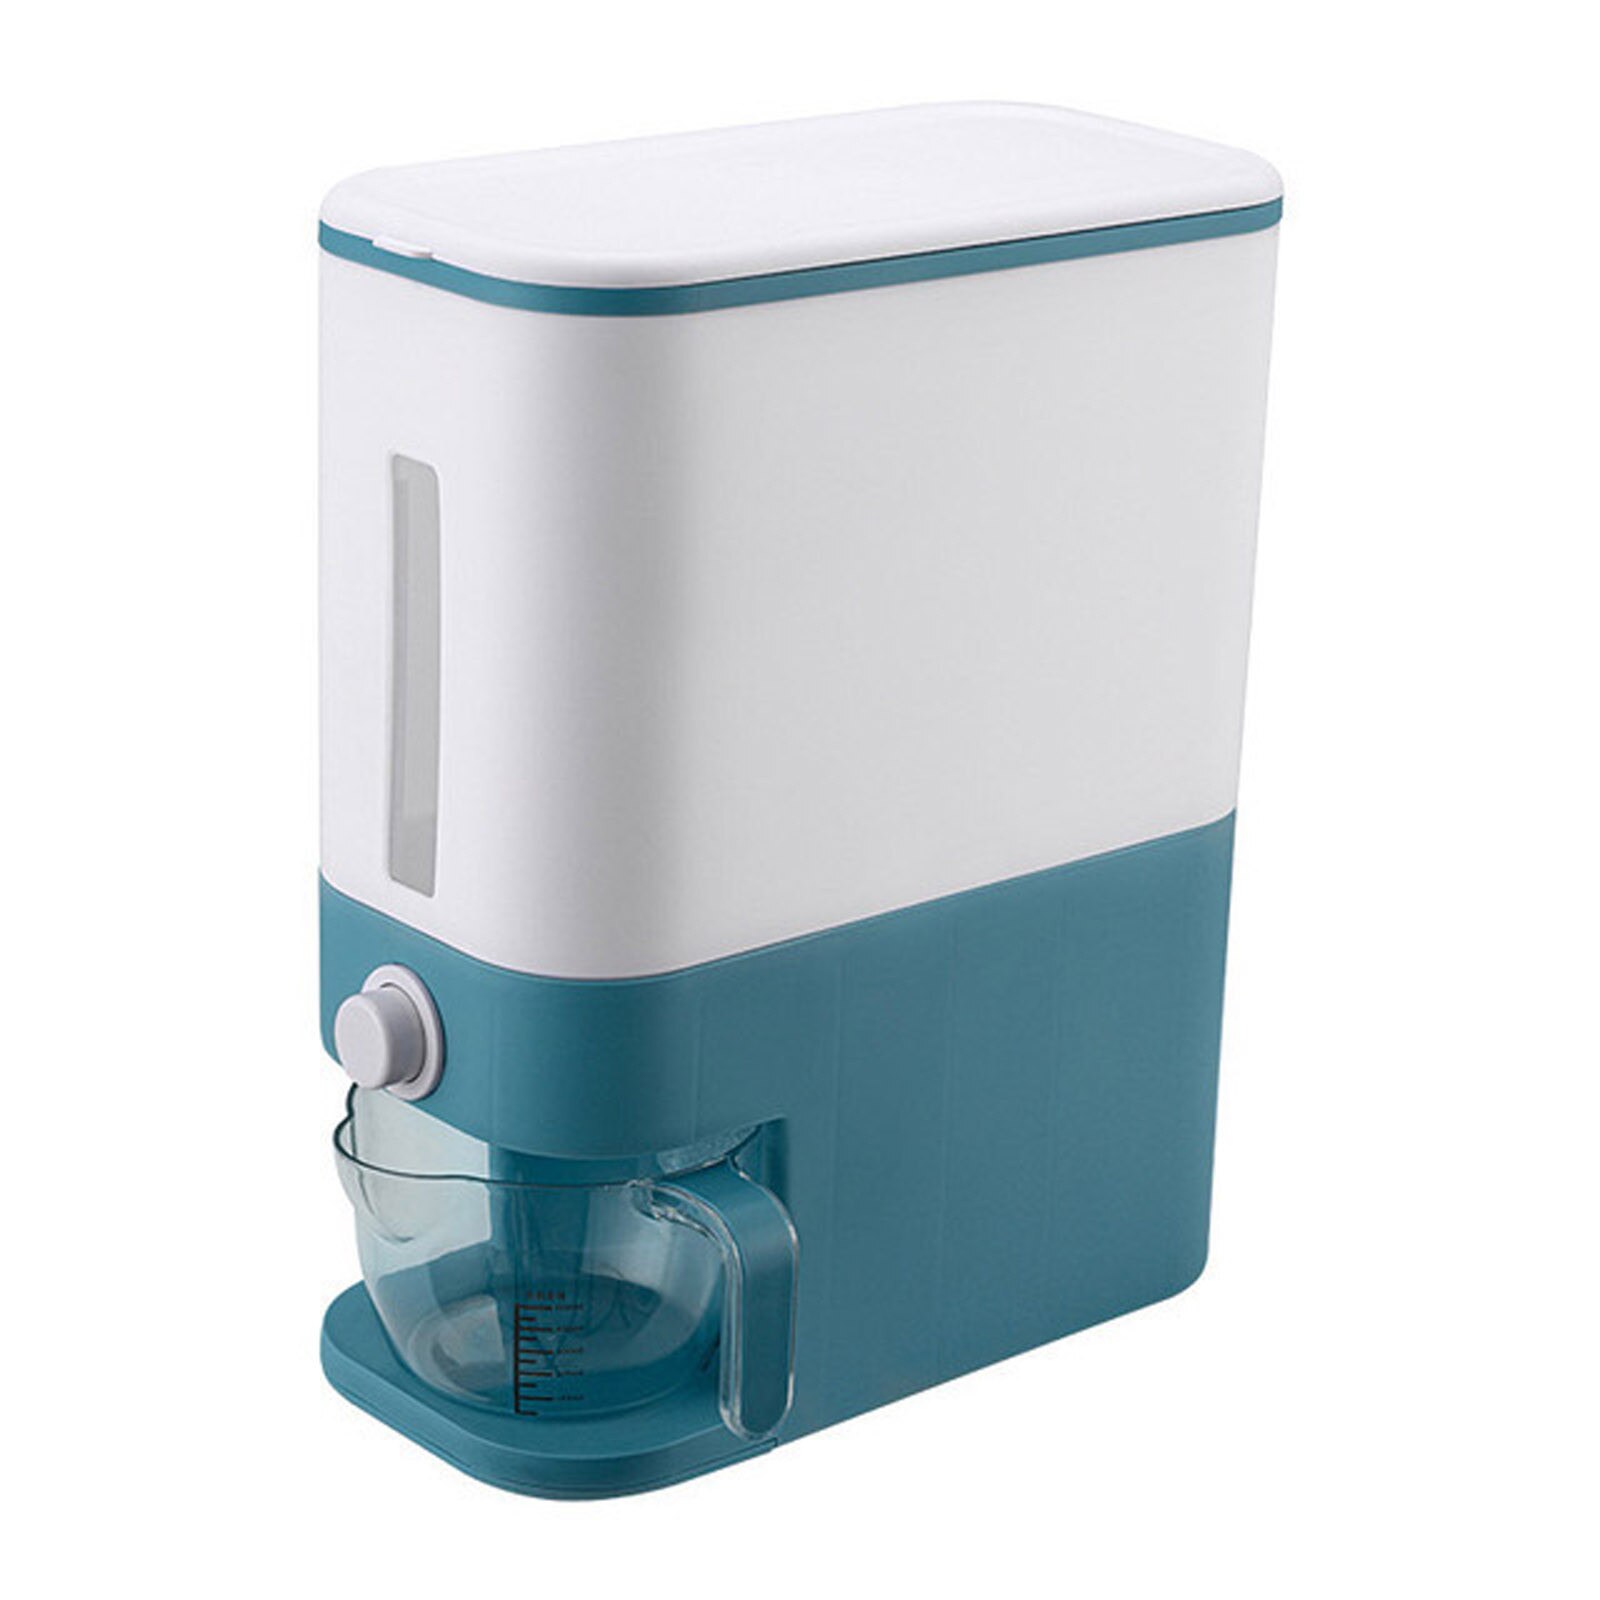 Husholdningspand opbevaringsboks doseringscylinder med automatisk opbevaringsboks klassificering måling riscylinder automatisk  #t1g: Blå